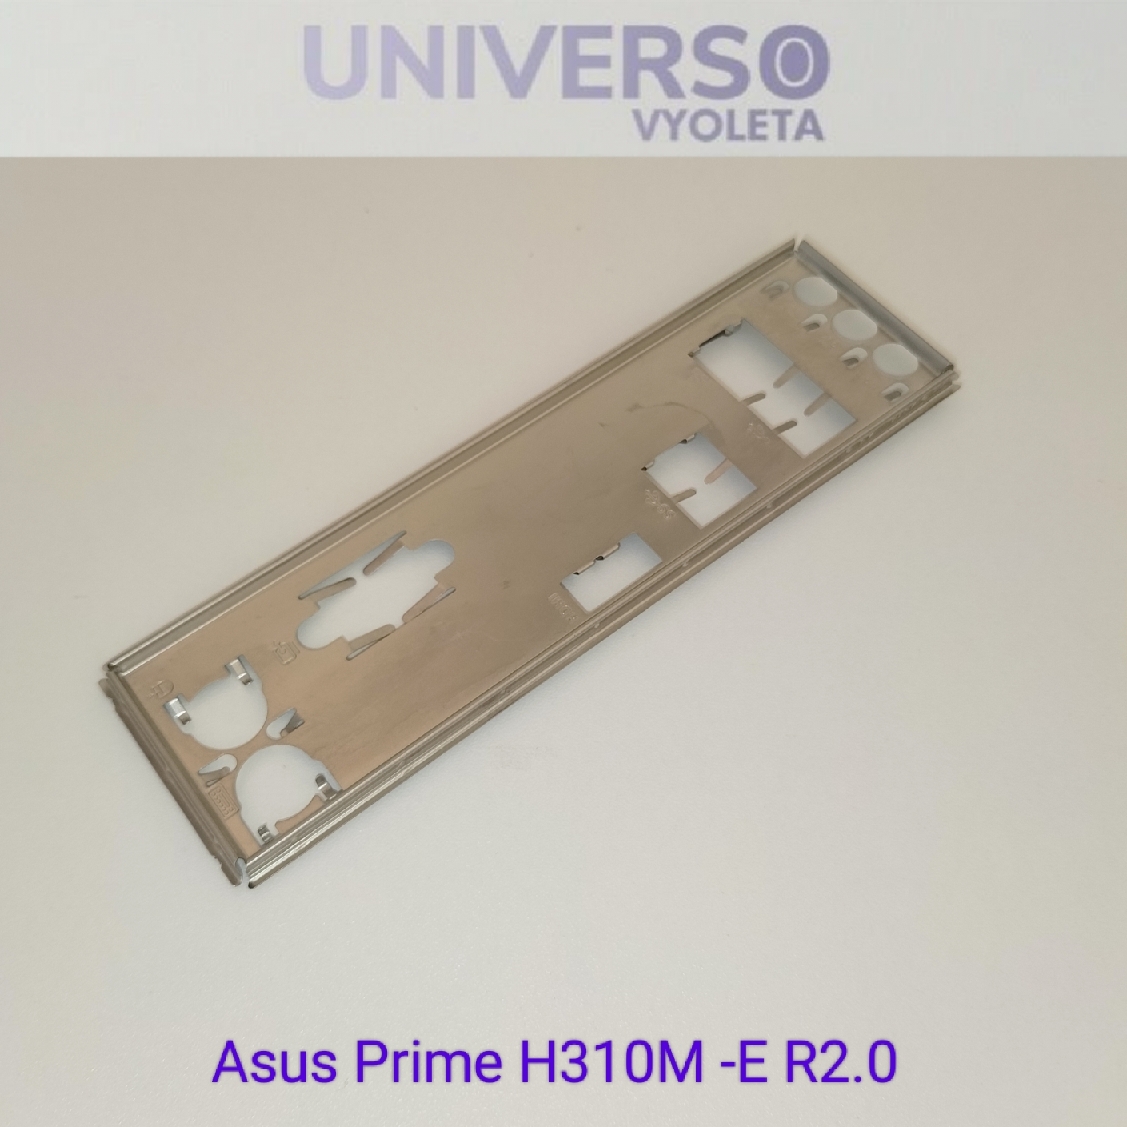 ASUS PRIME H310M-E R2.0